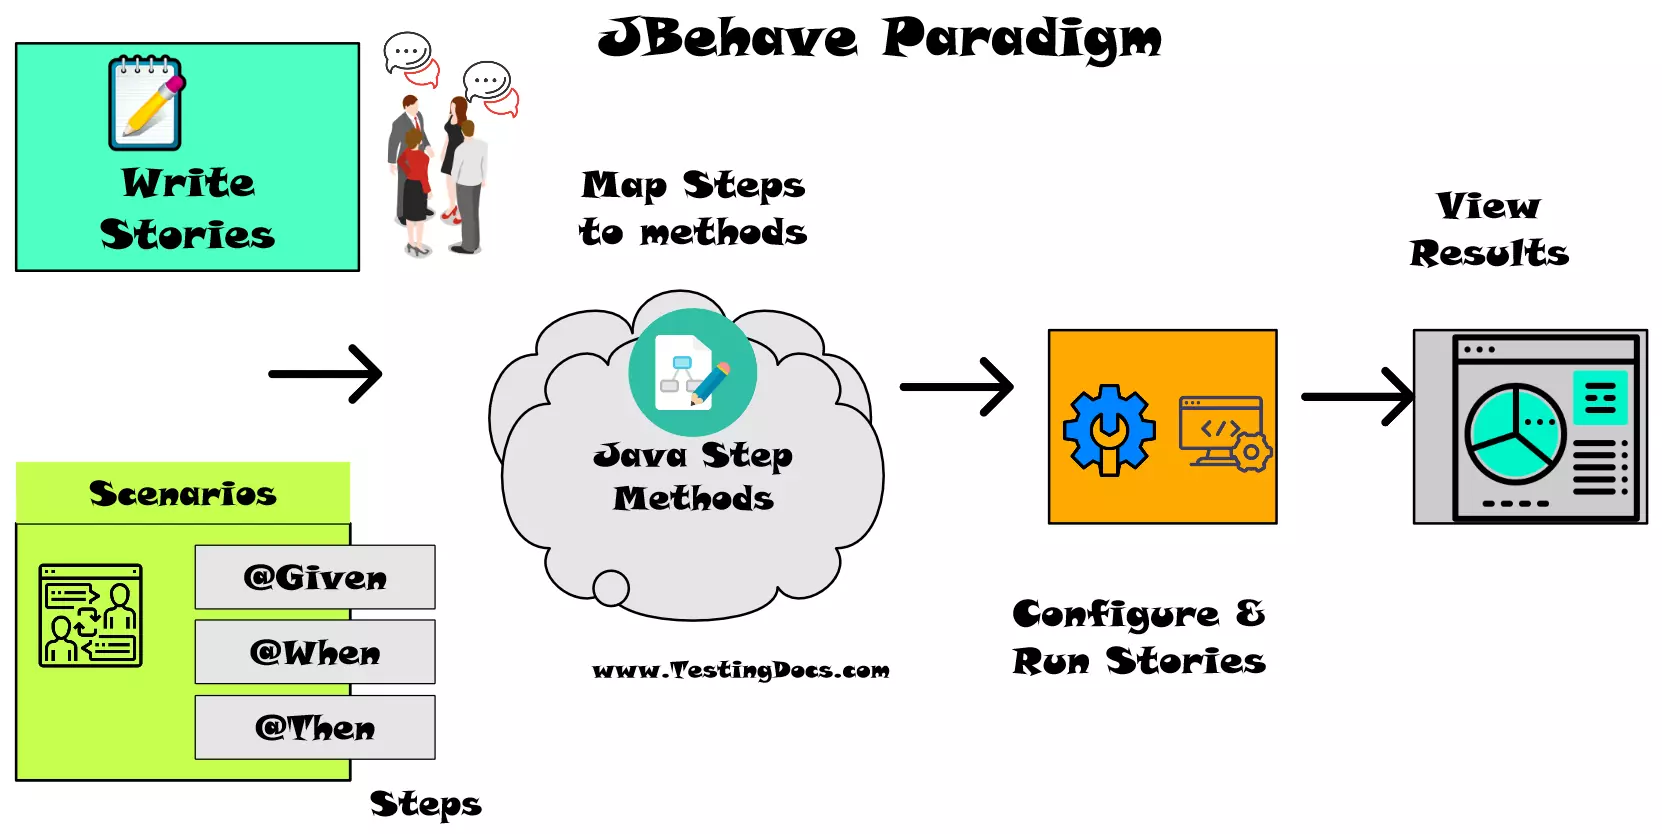 JBehave Framework Paradigm